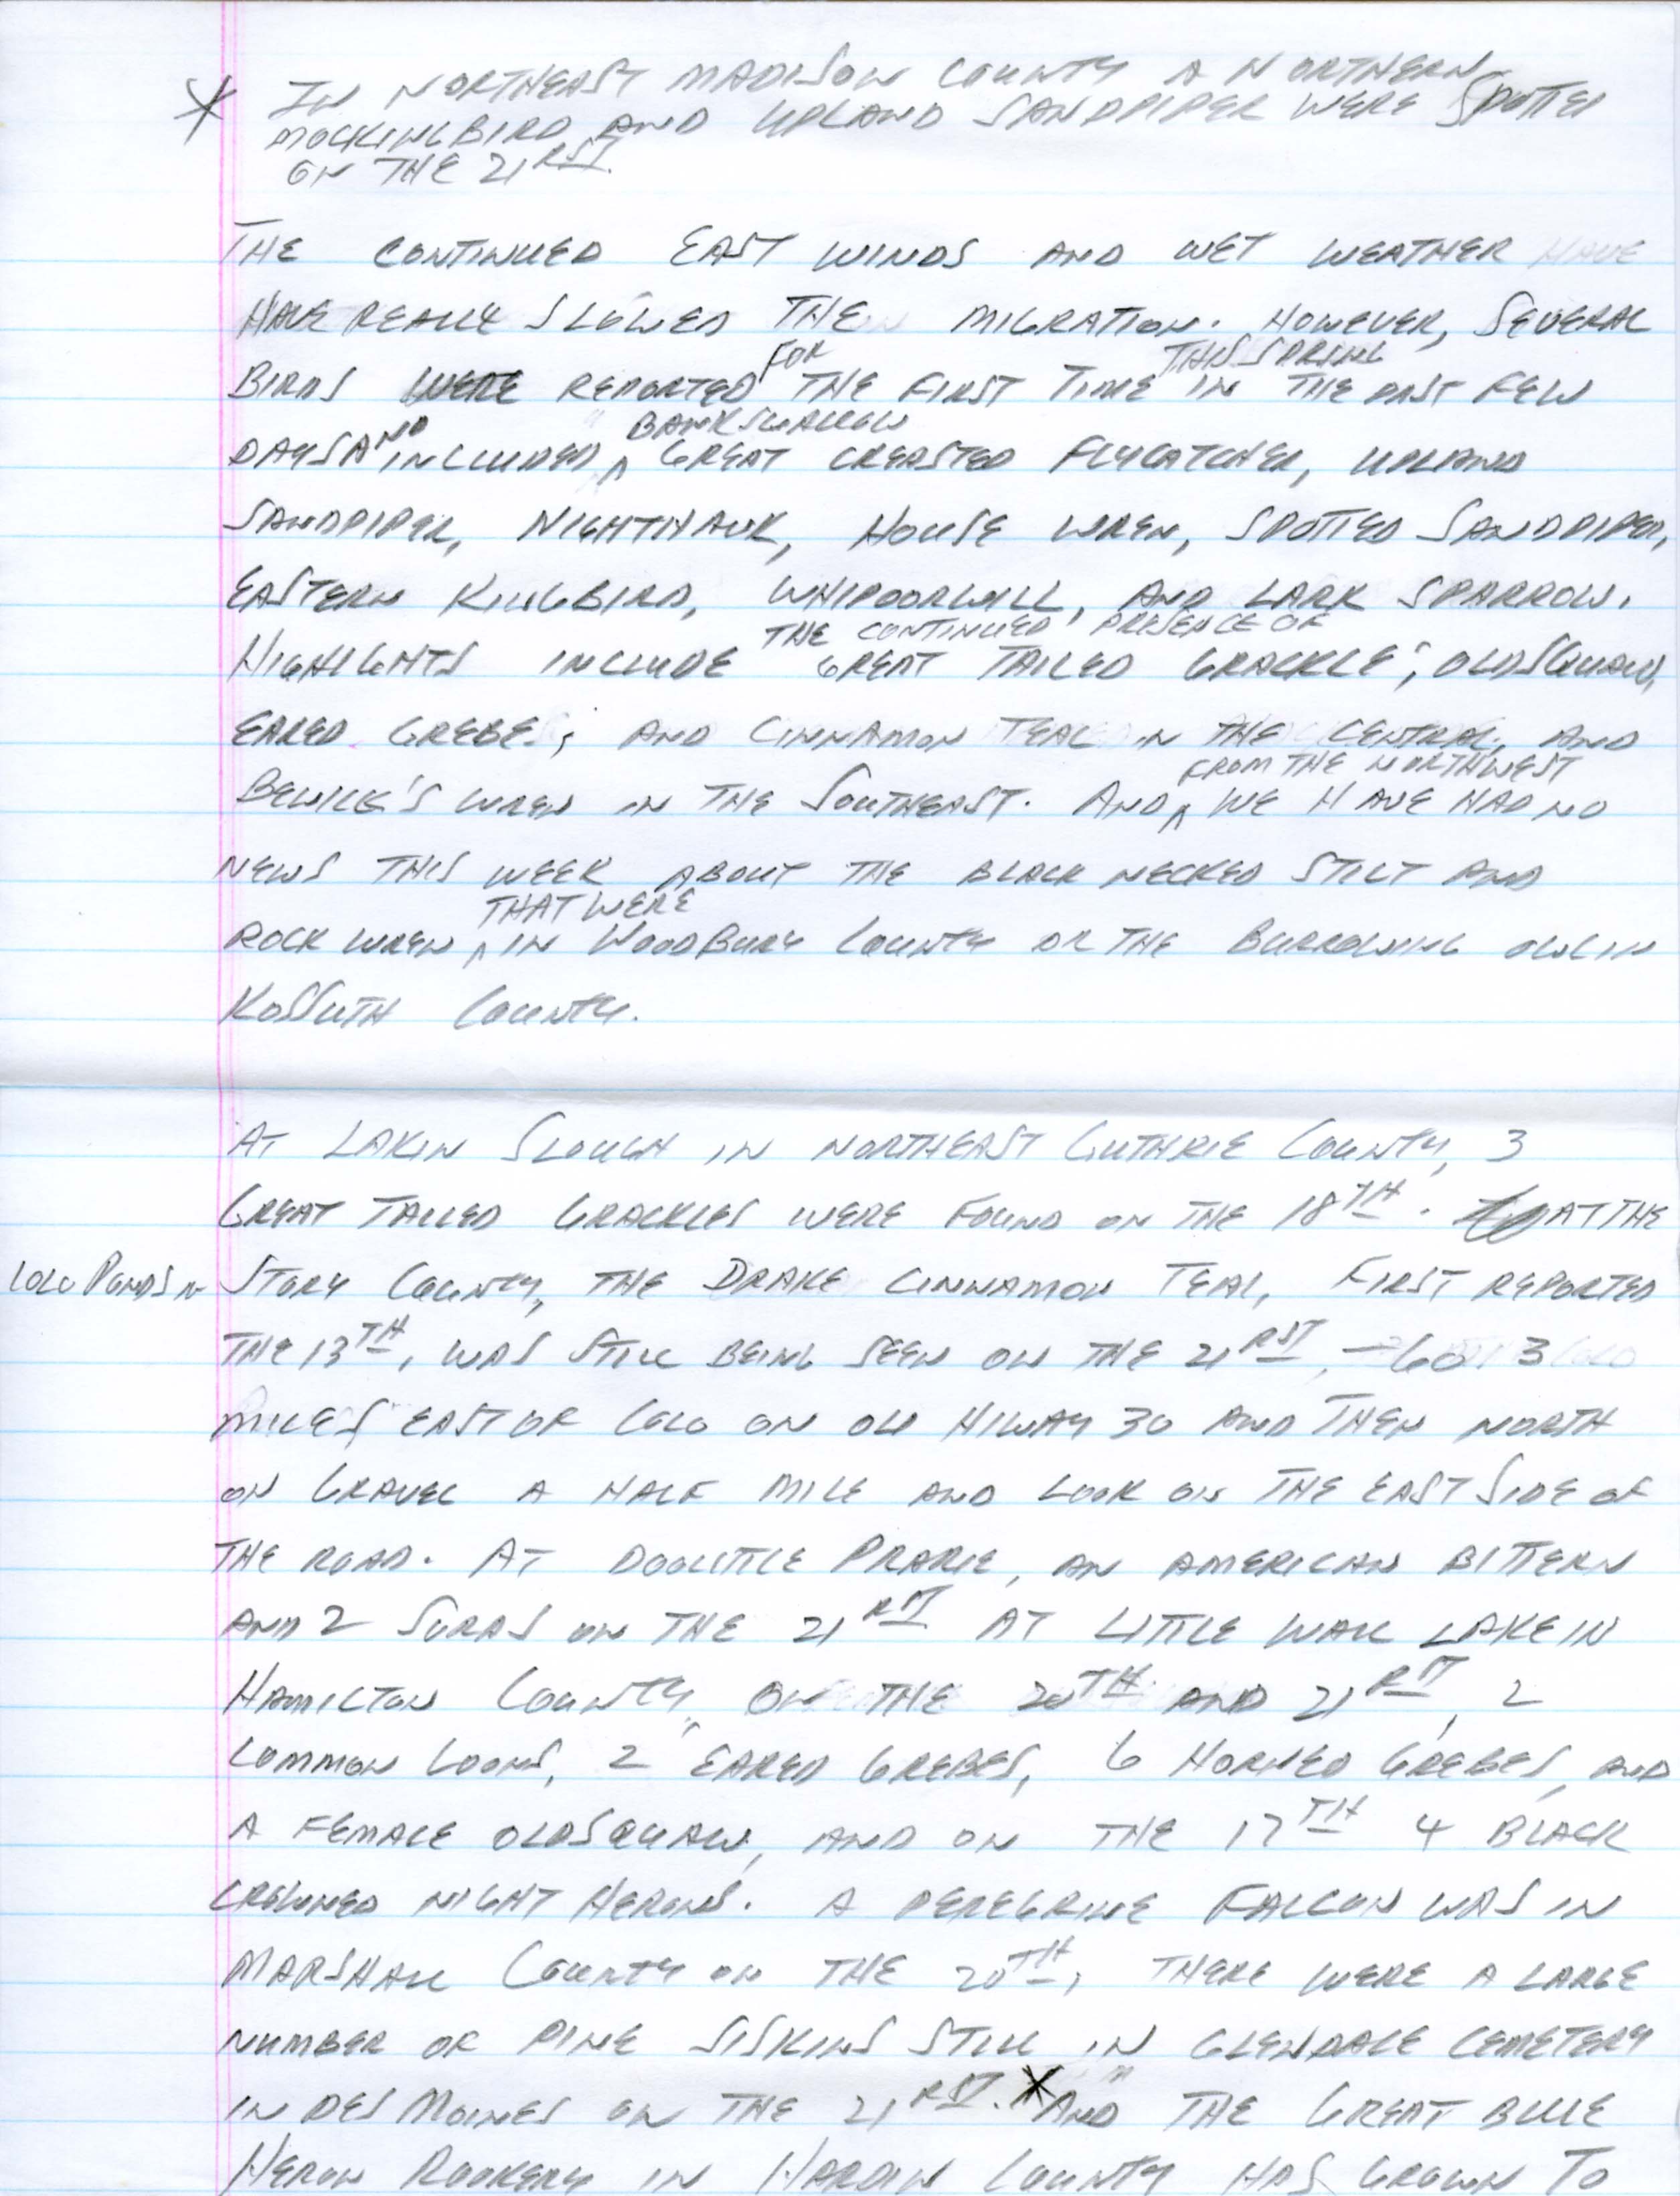 Iowa Birdline update, April 22, 1991 notes